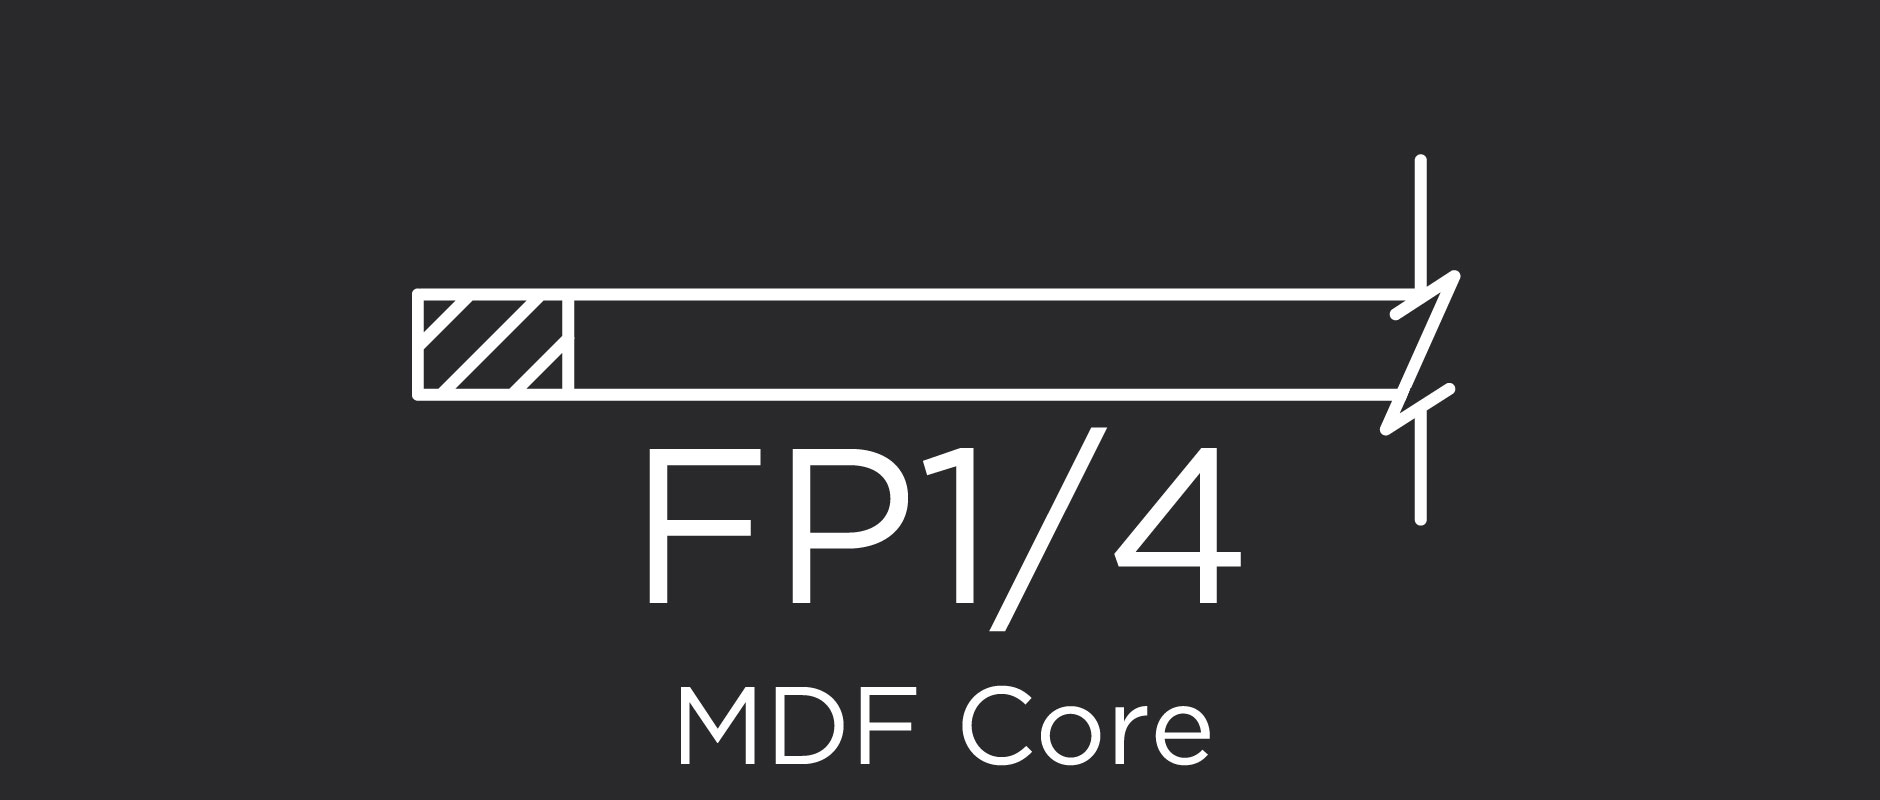 FP1/4 MDF Core Flat Panel